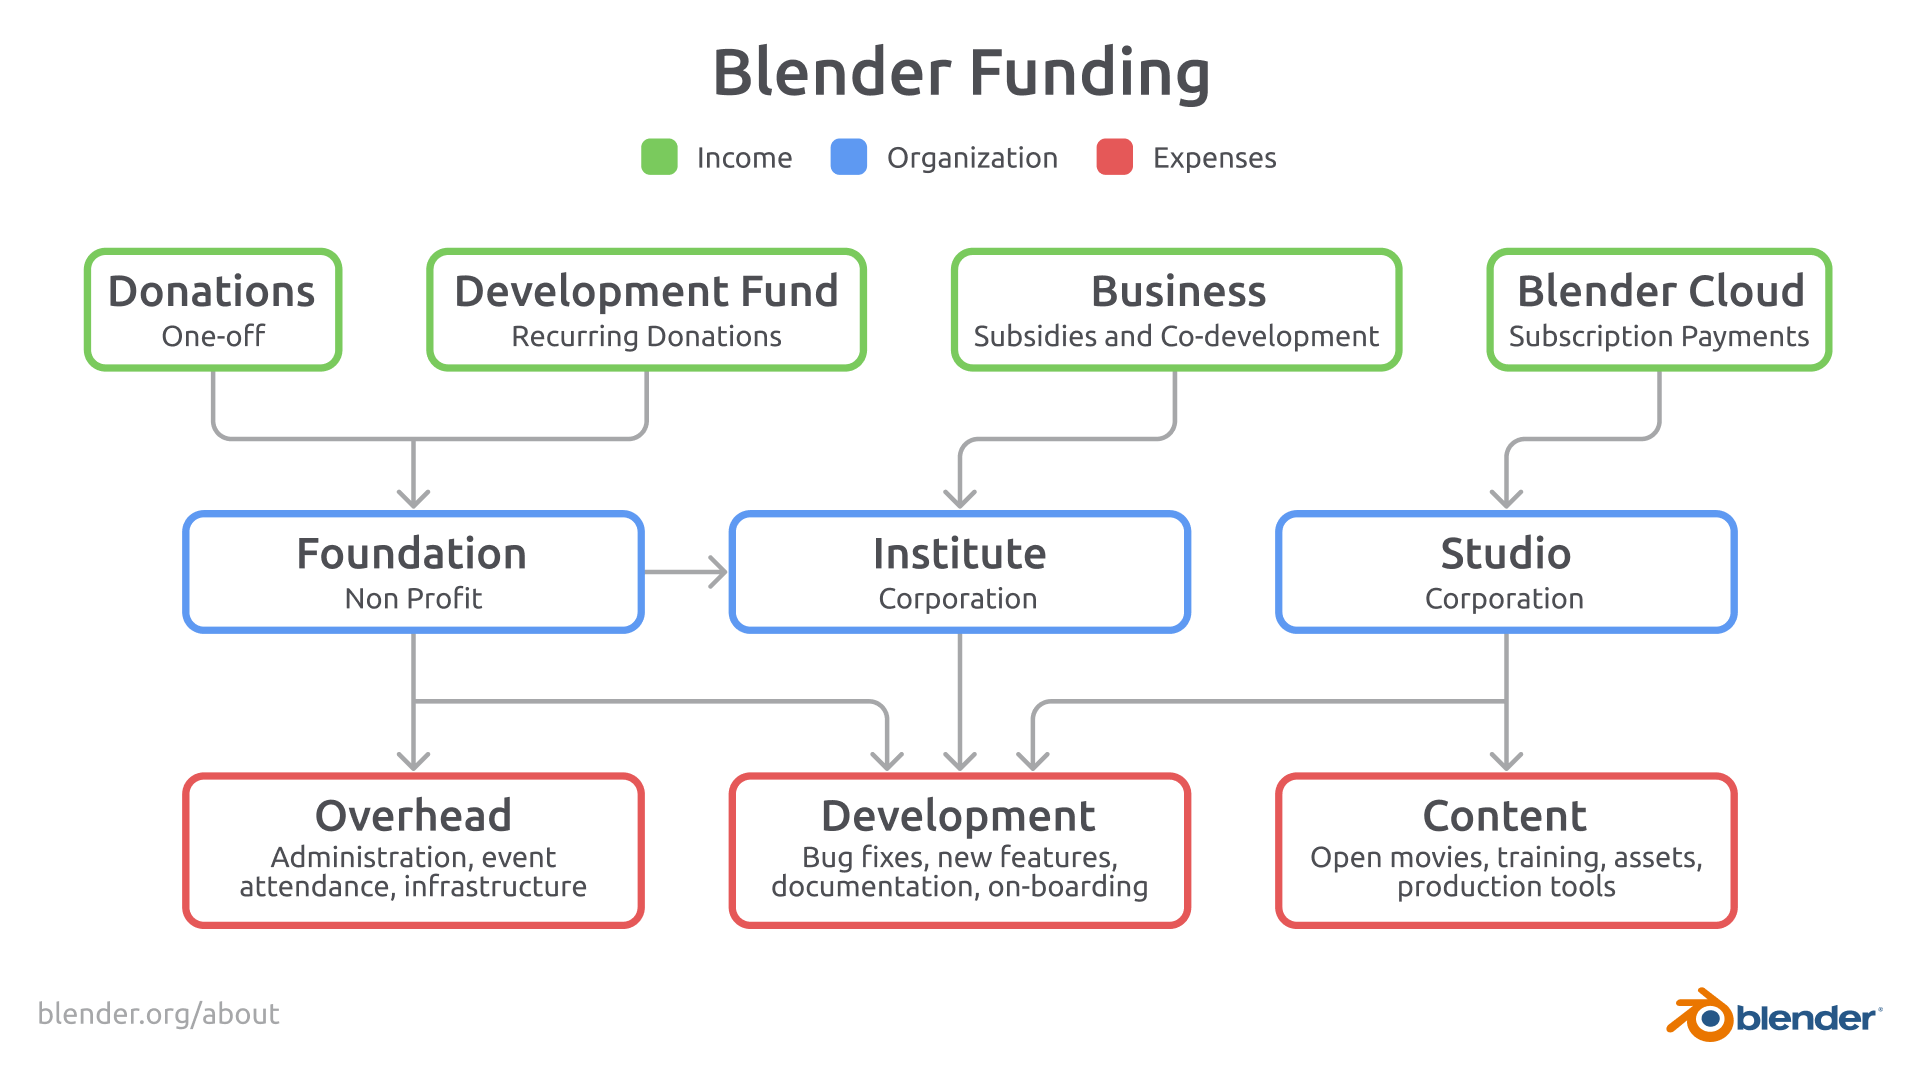 About — blender.org